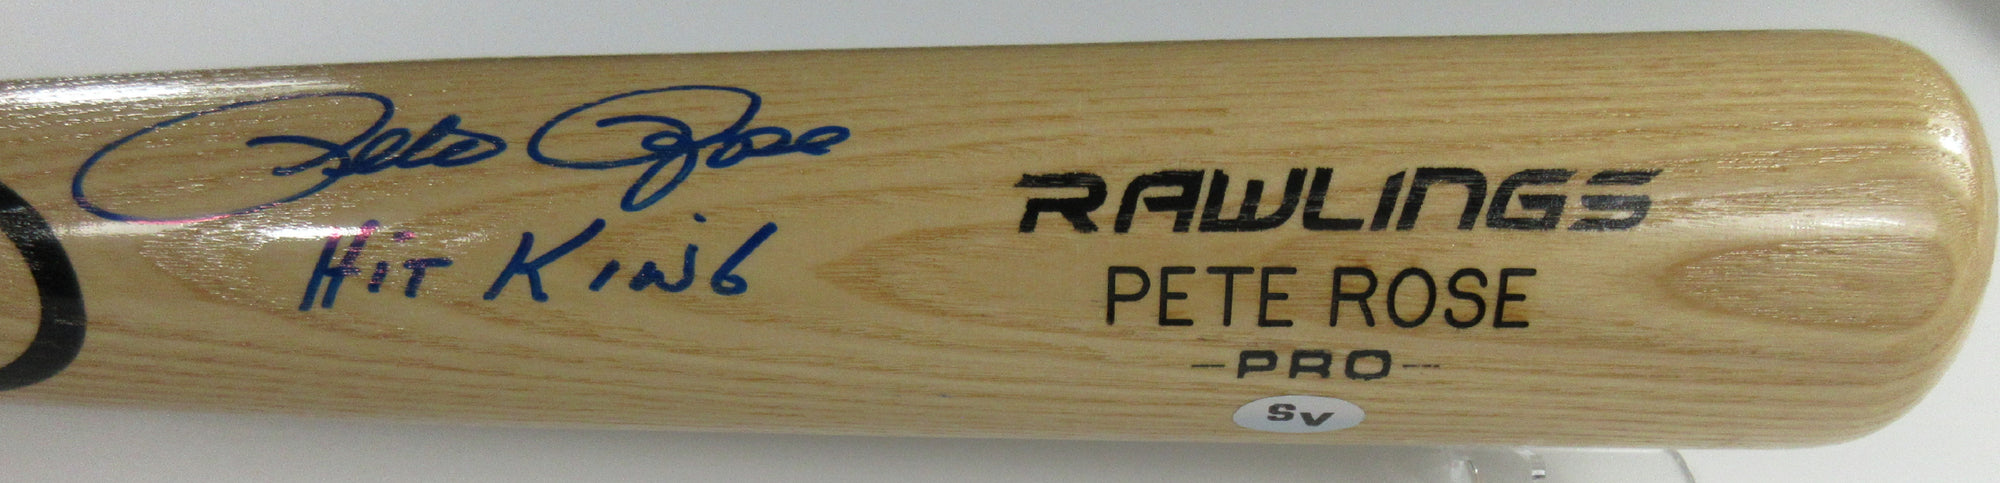 Pete Rose Cincinnati Reds Autographed Rawlings Bat Inscribed "Hit King"